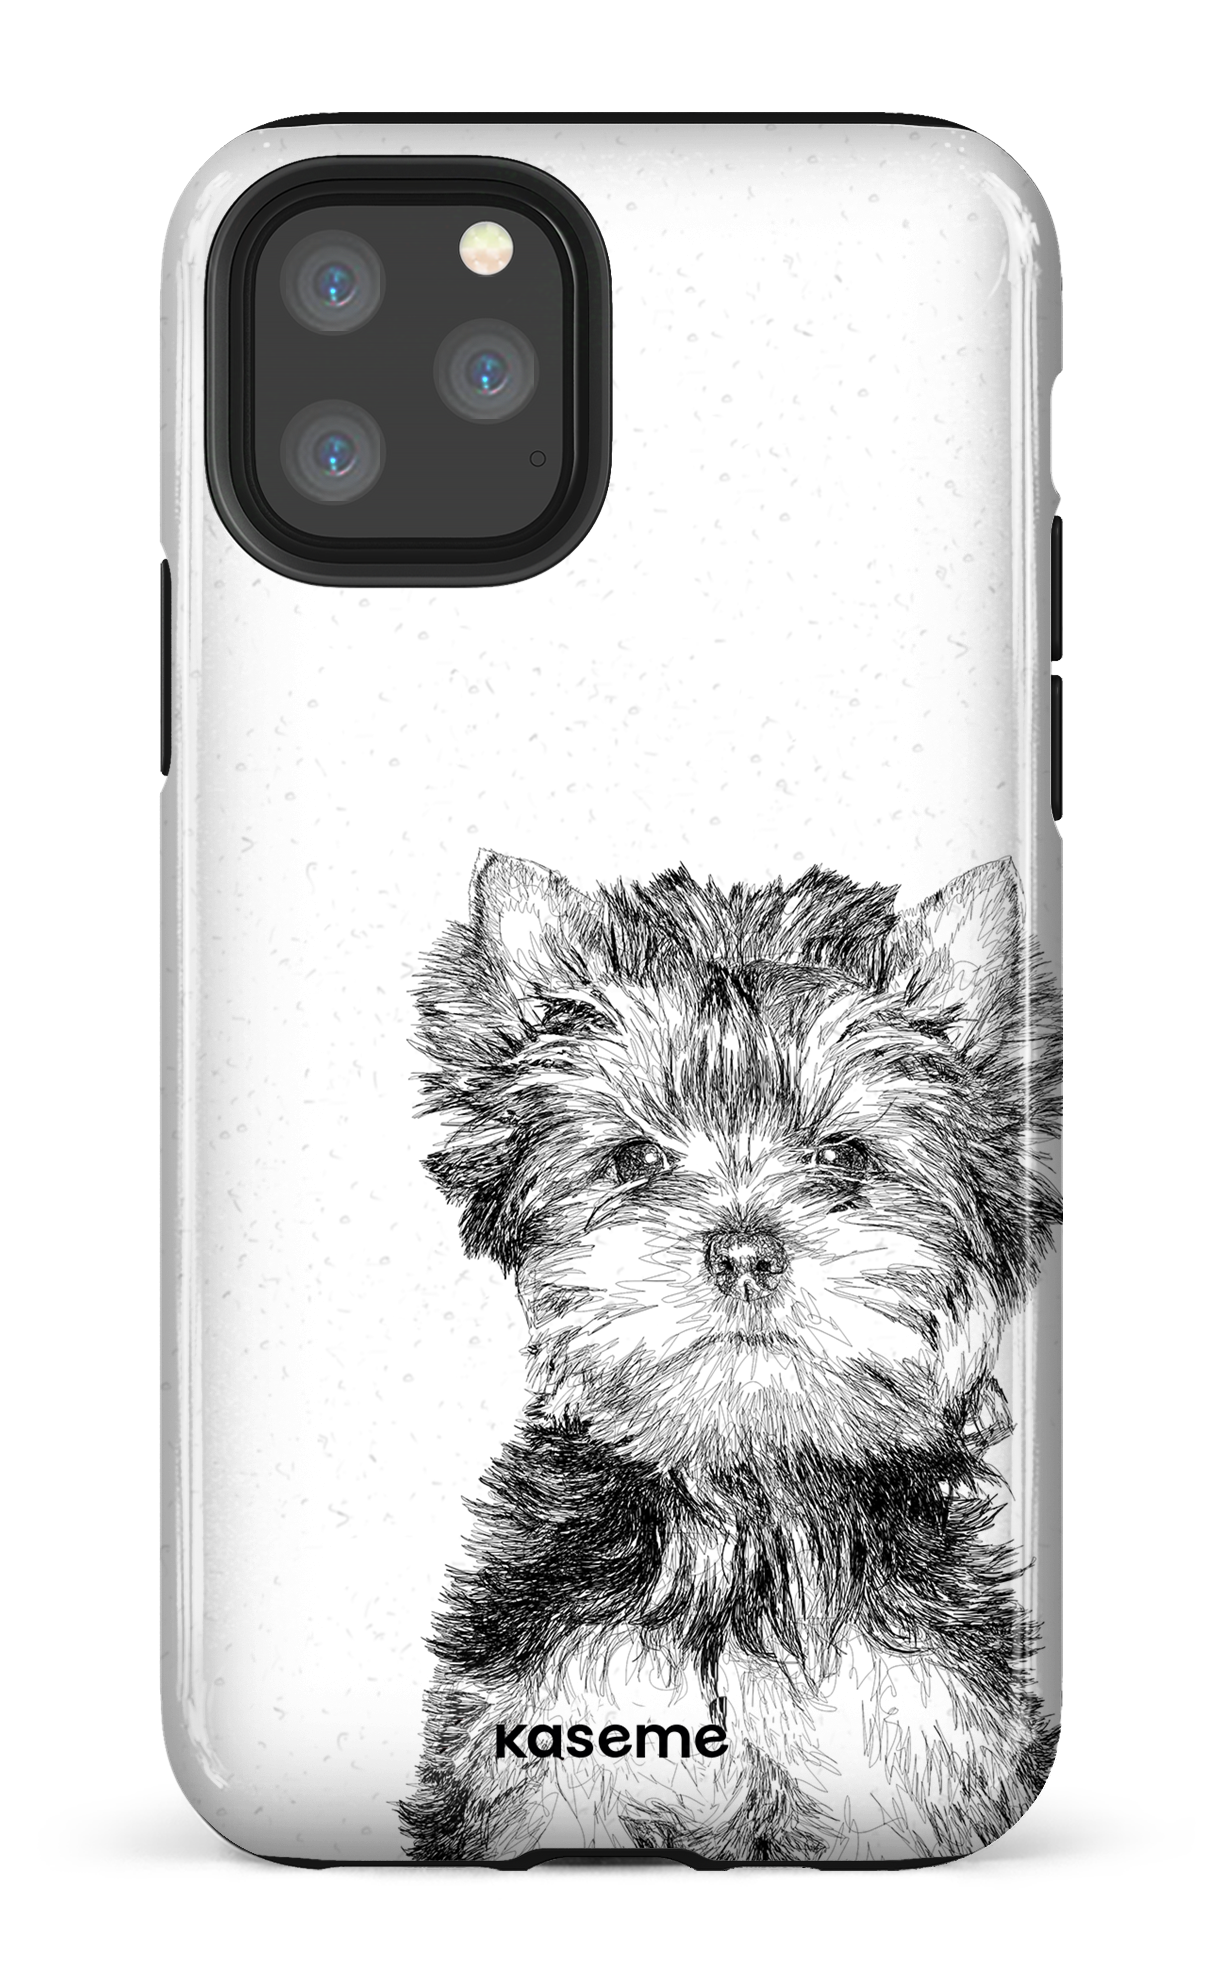 Yorkshire Terrier - iPhone 11 Pro